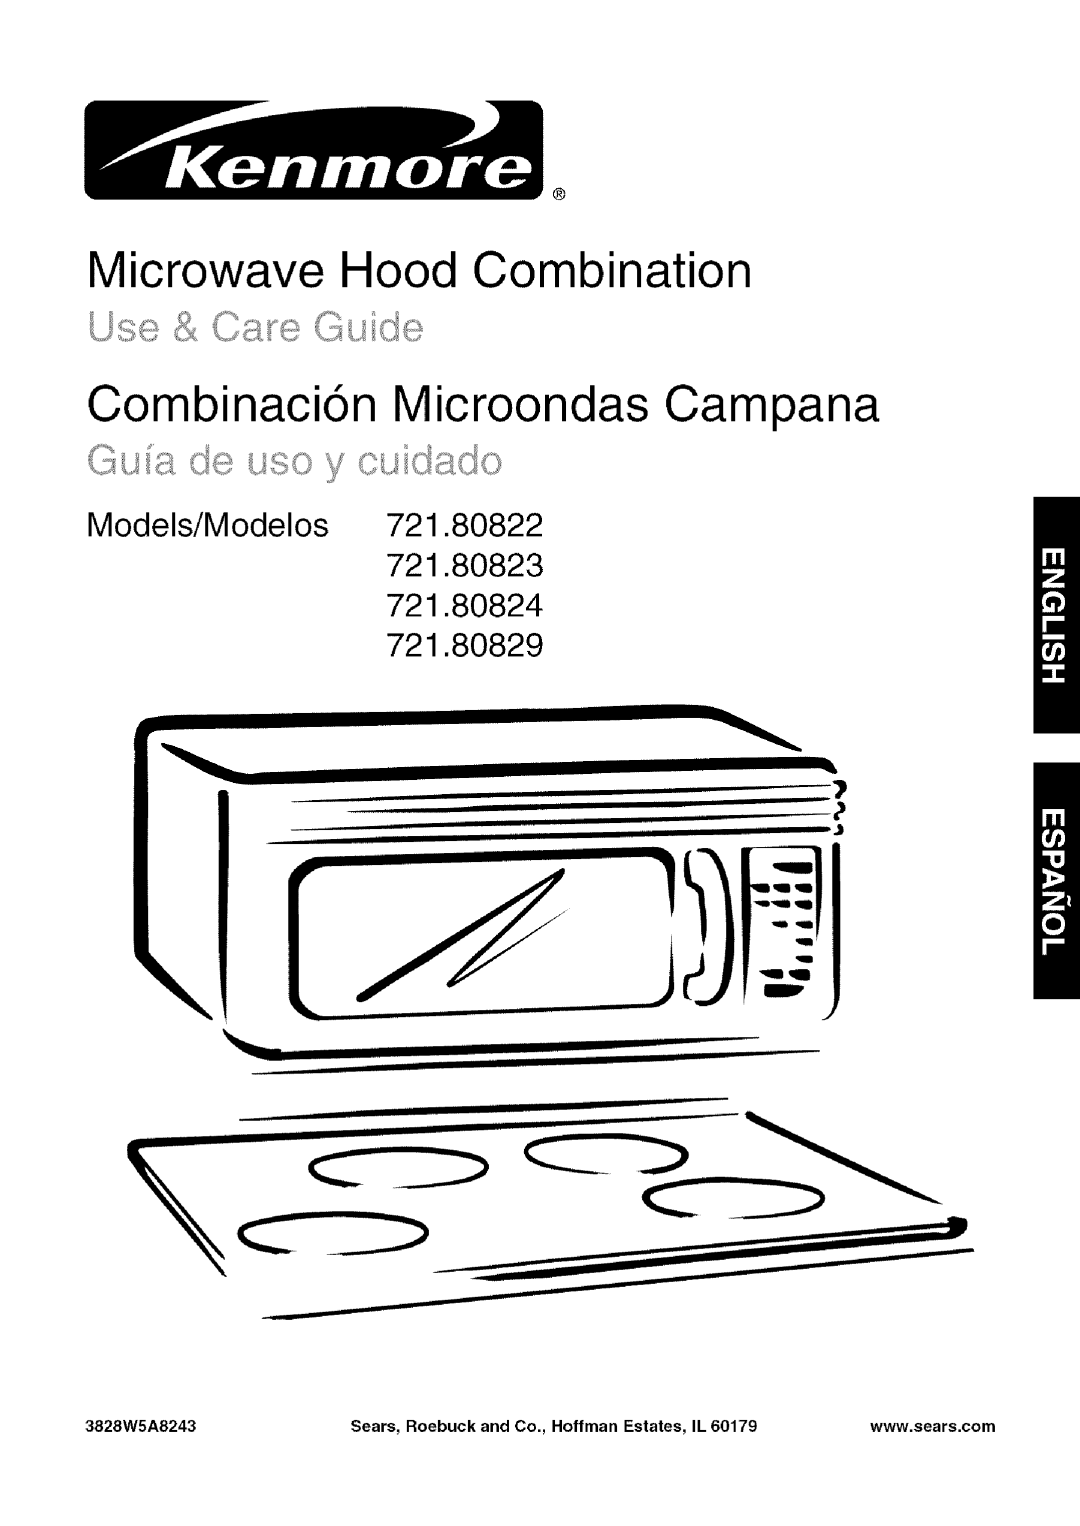 Kenmore 721.80823, 721.80824 manual Microwave Hood Combination, Combinaci6n M icroondas Campana, jvill, Models/Modelos 